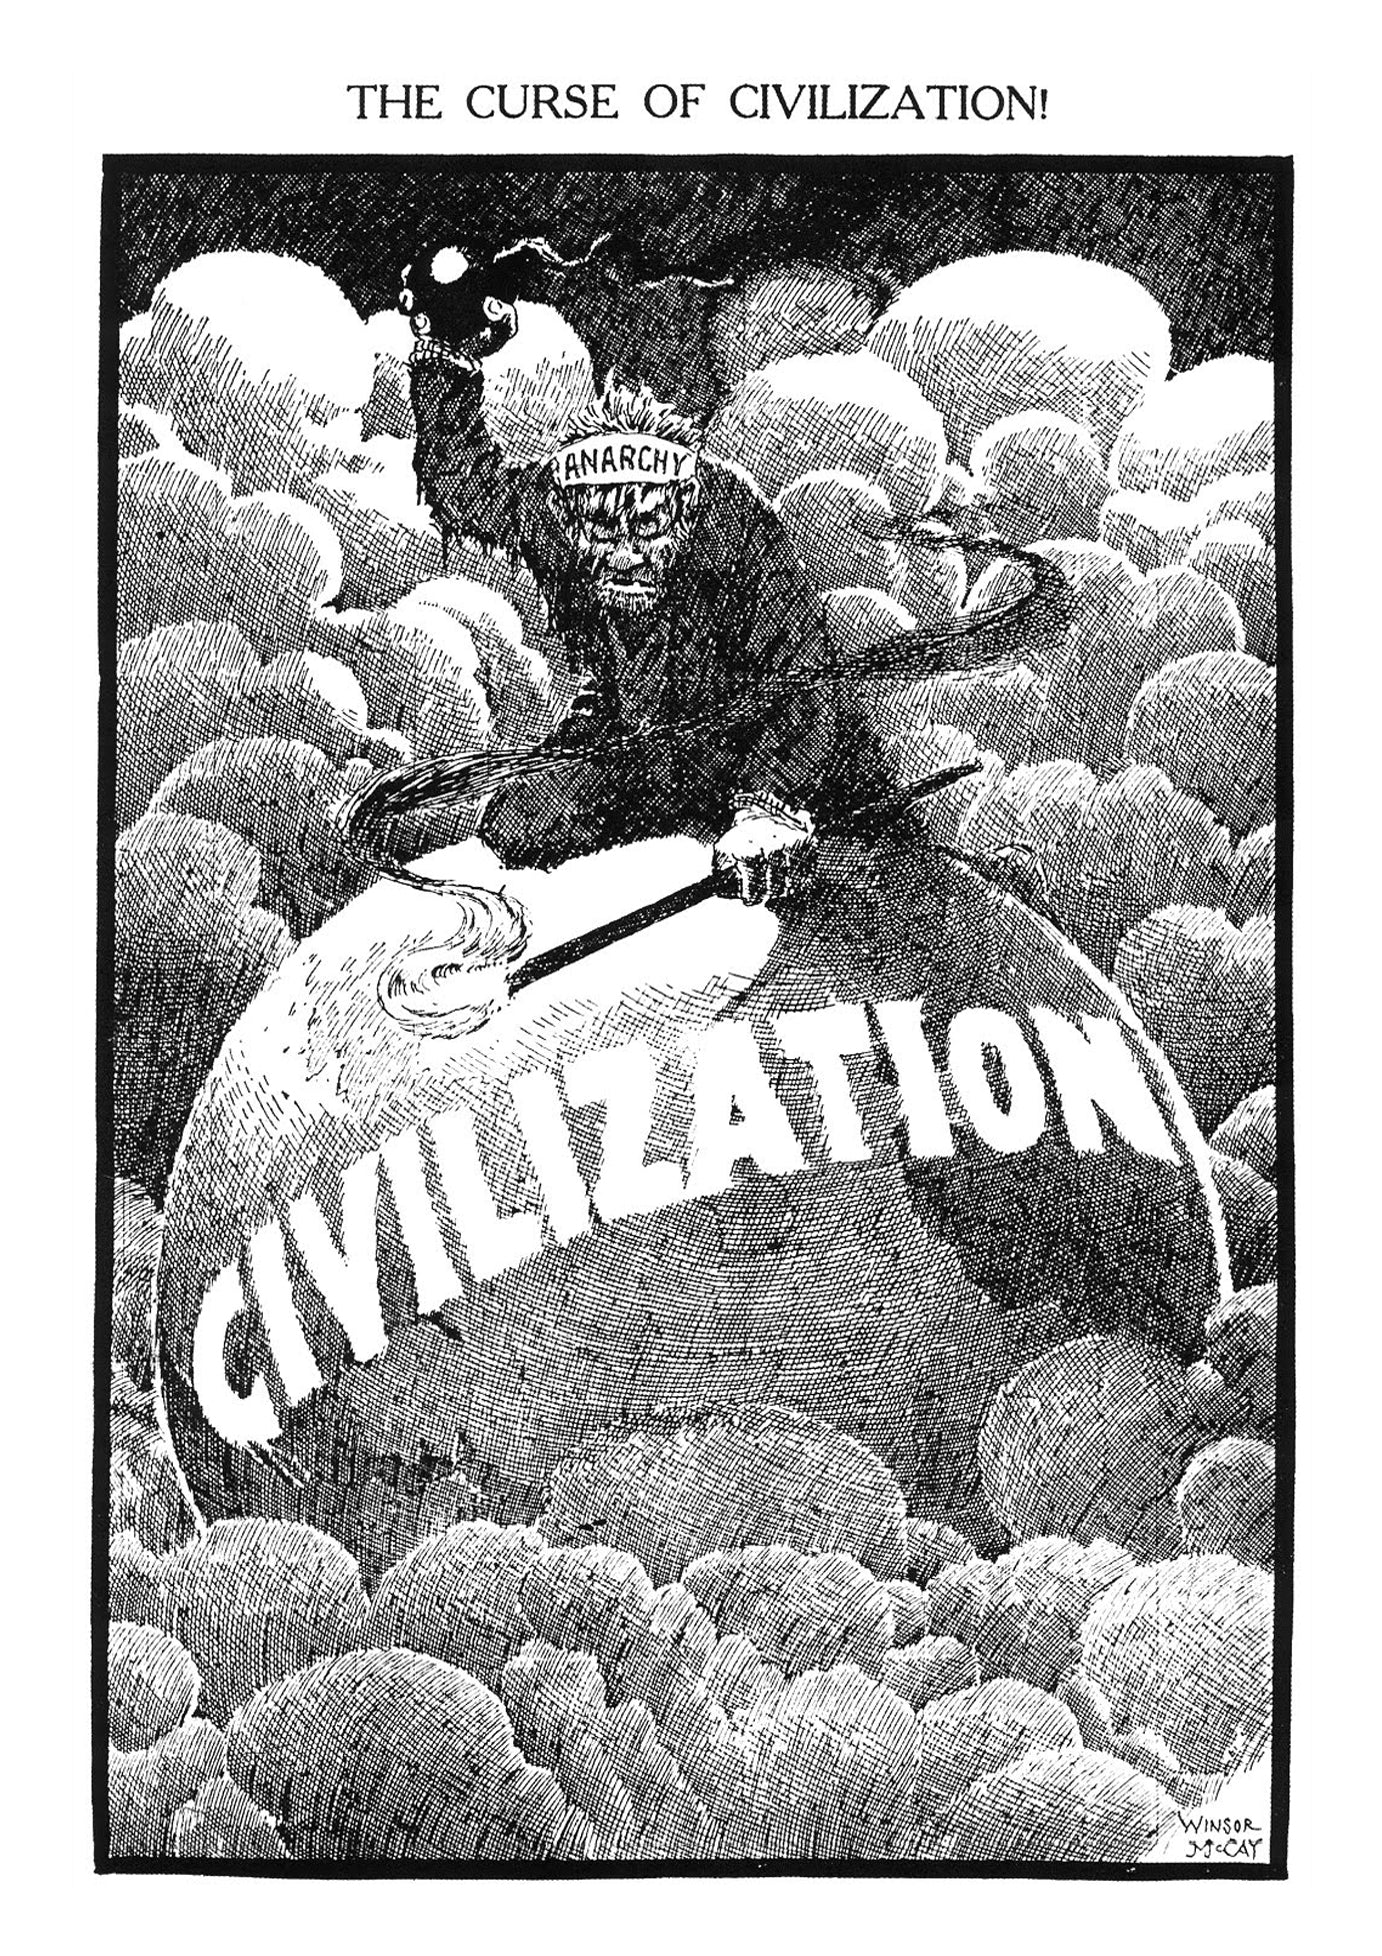 The Curse of Civilization! — American anti-anarchist print